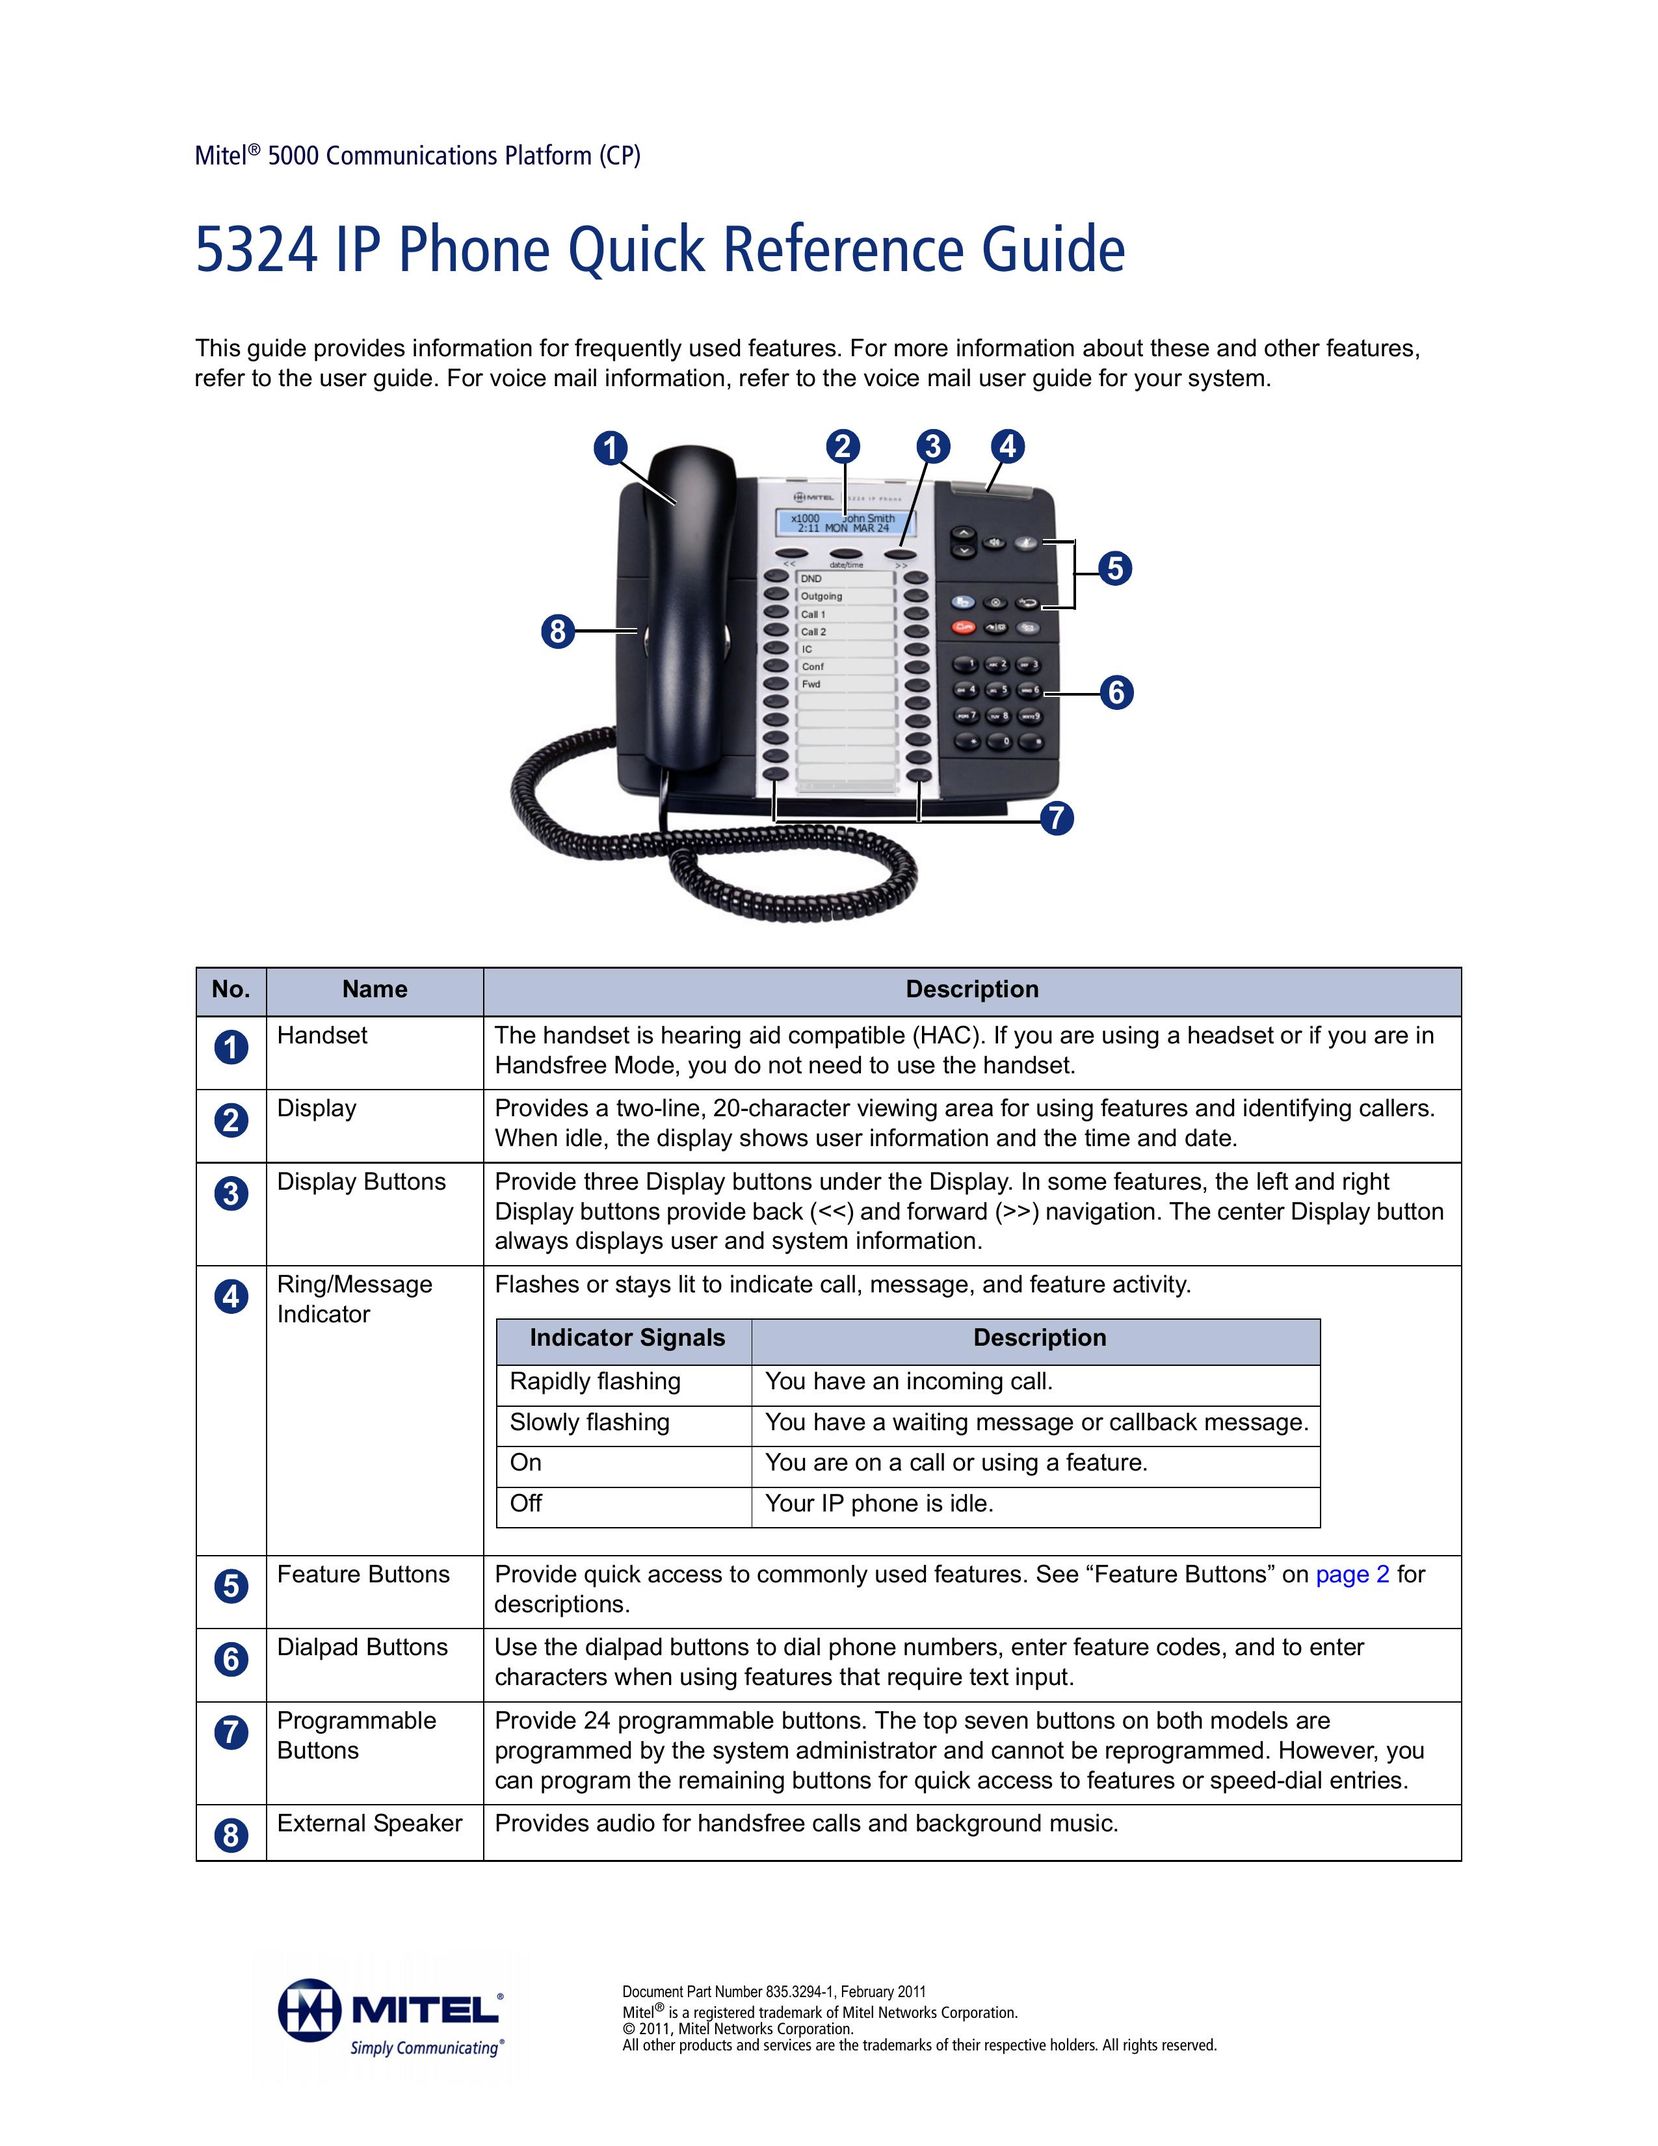 Mitel 5324 Cordless Telephone User Manual